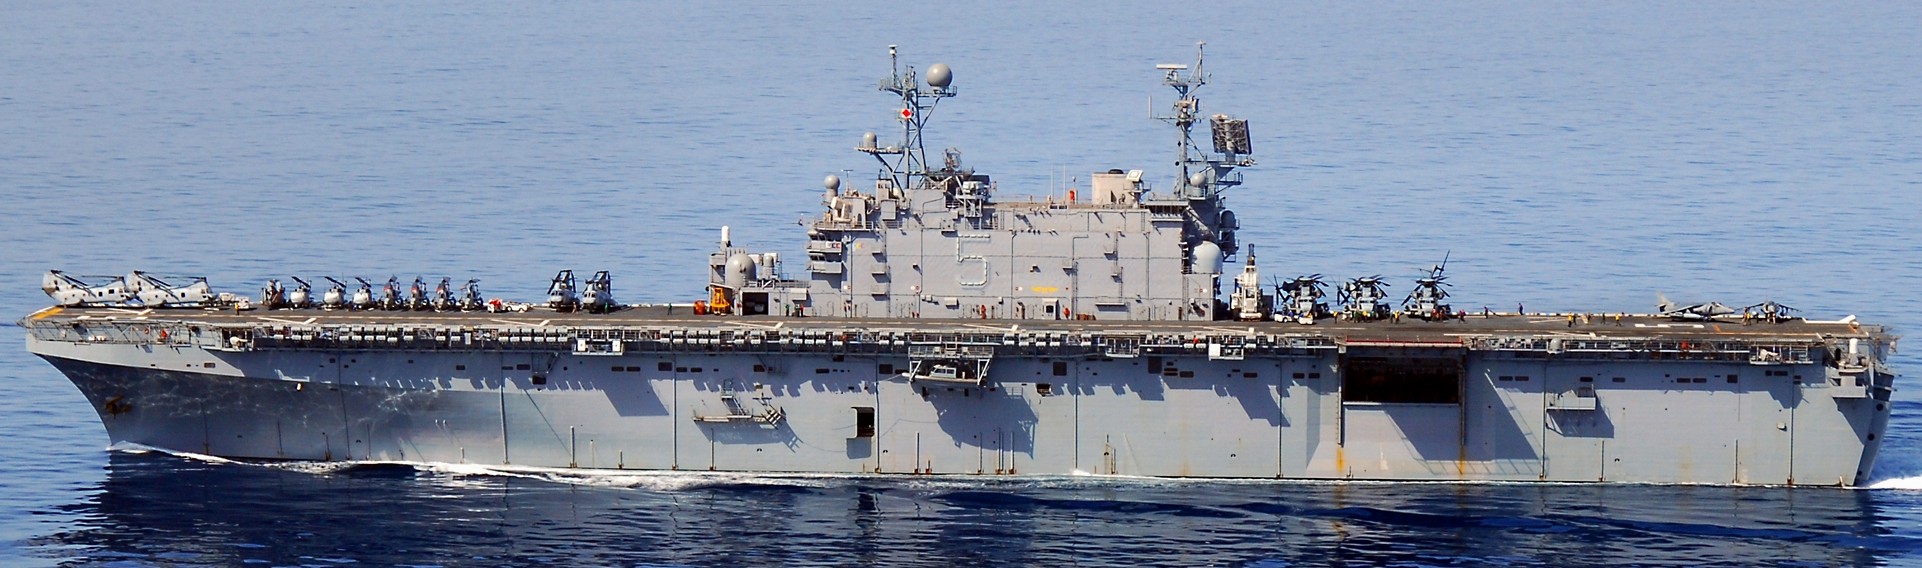 lha-5 uss peleliu tarawa class amphibious assault ship landing helicopter us navy hmm-165(rein) marines 51